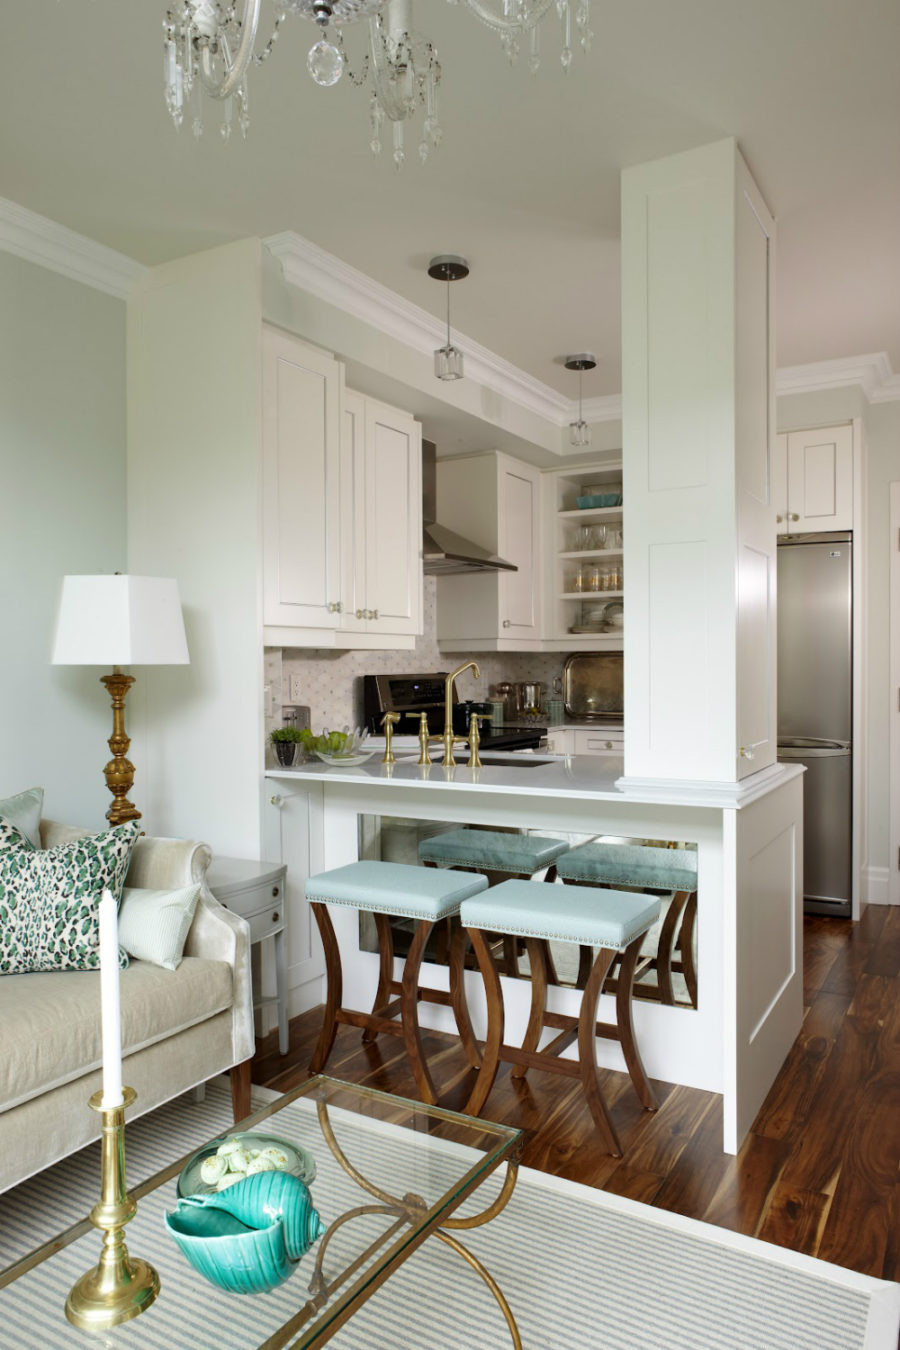 Small Kitchen Peninsula
 Kitchen Peninsula Designs That Make Cook Rooms Look Amazing